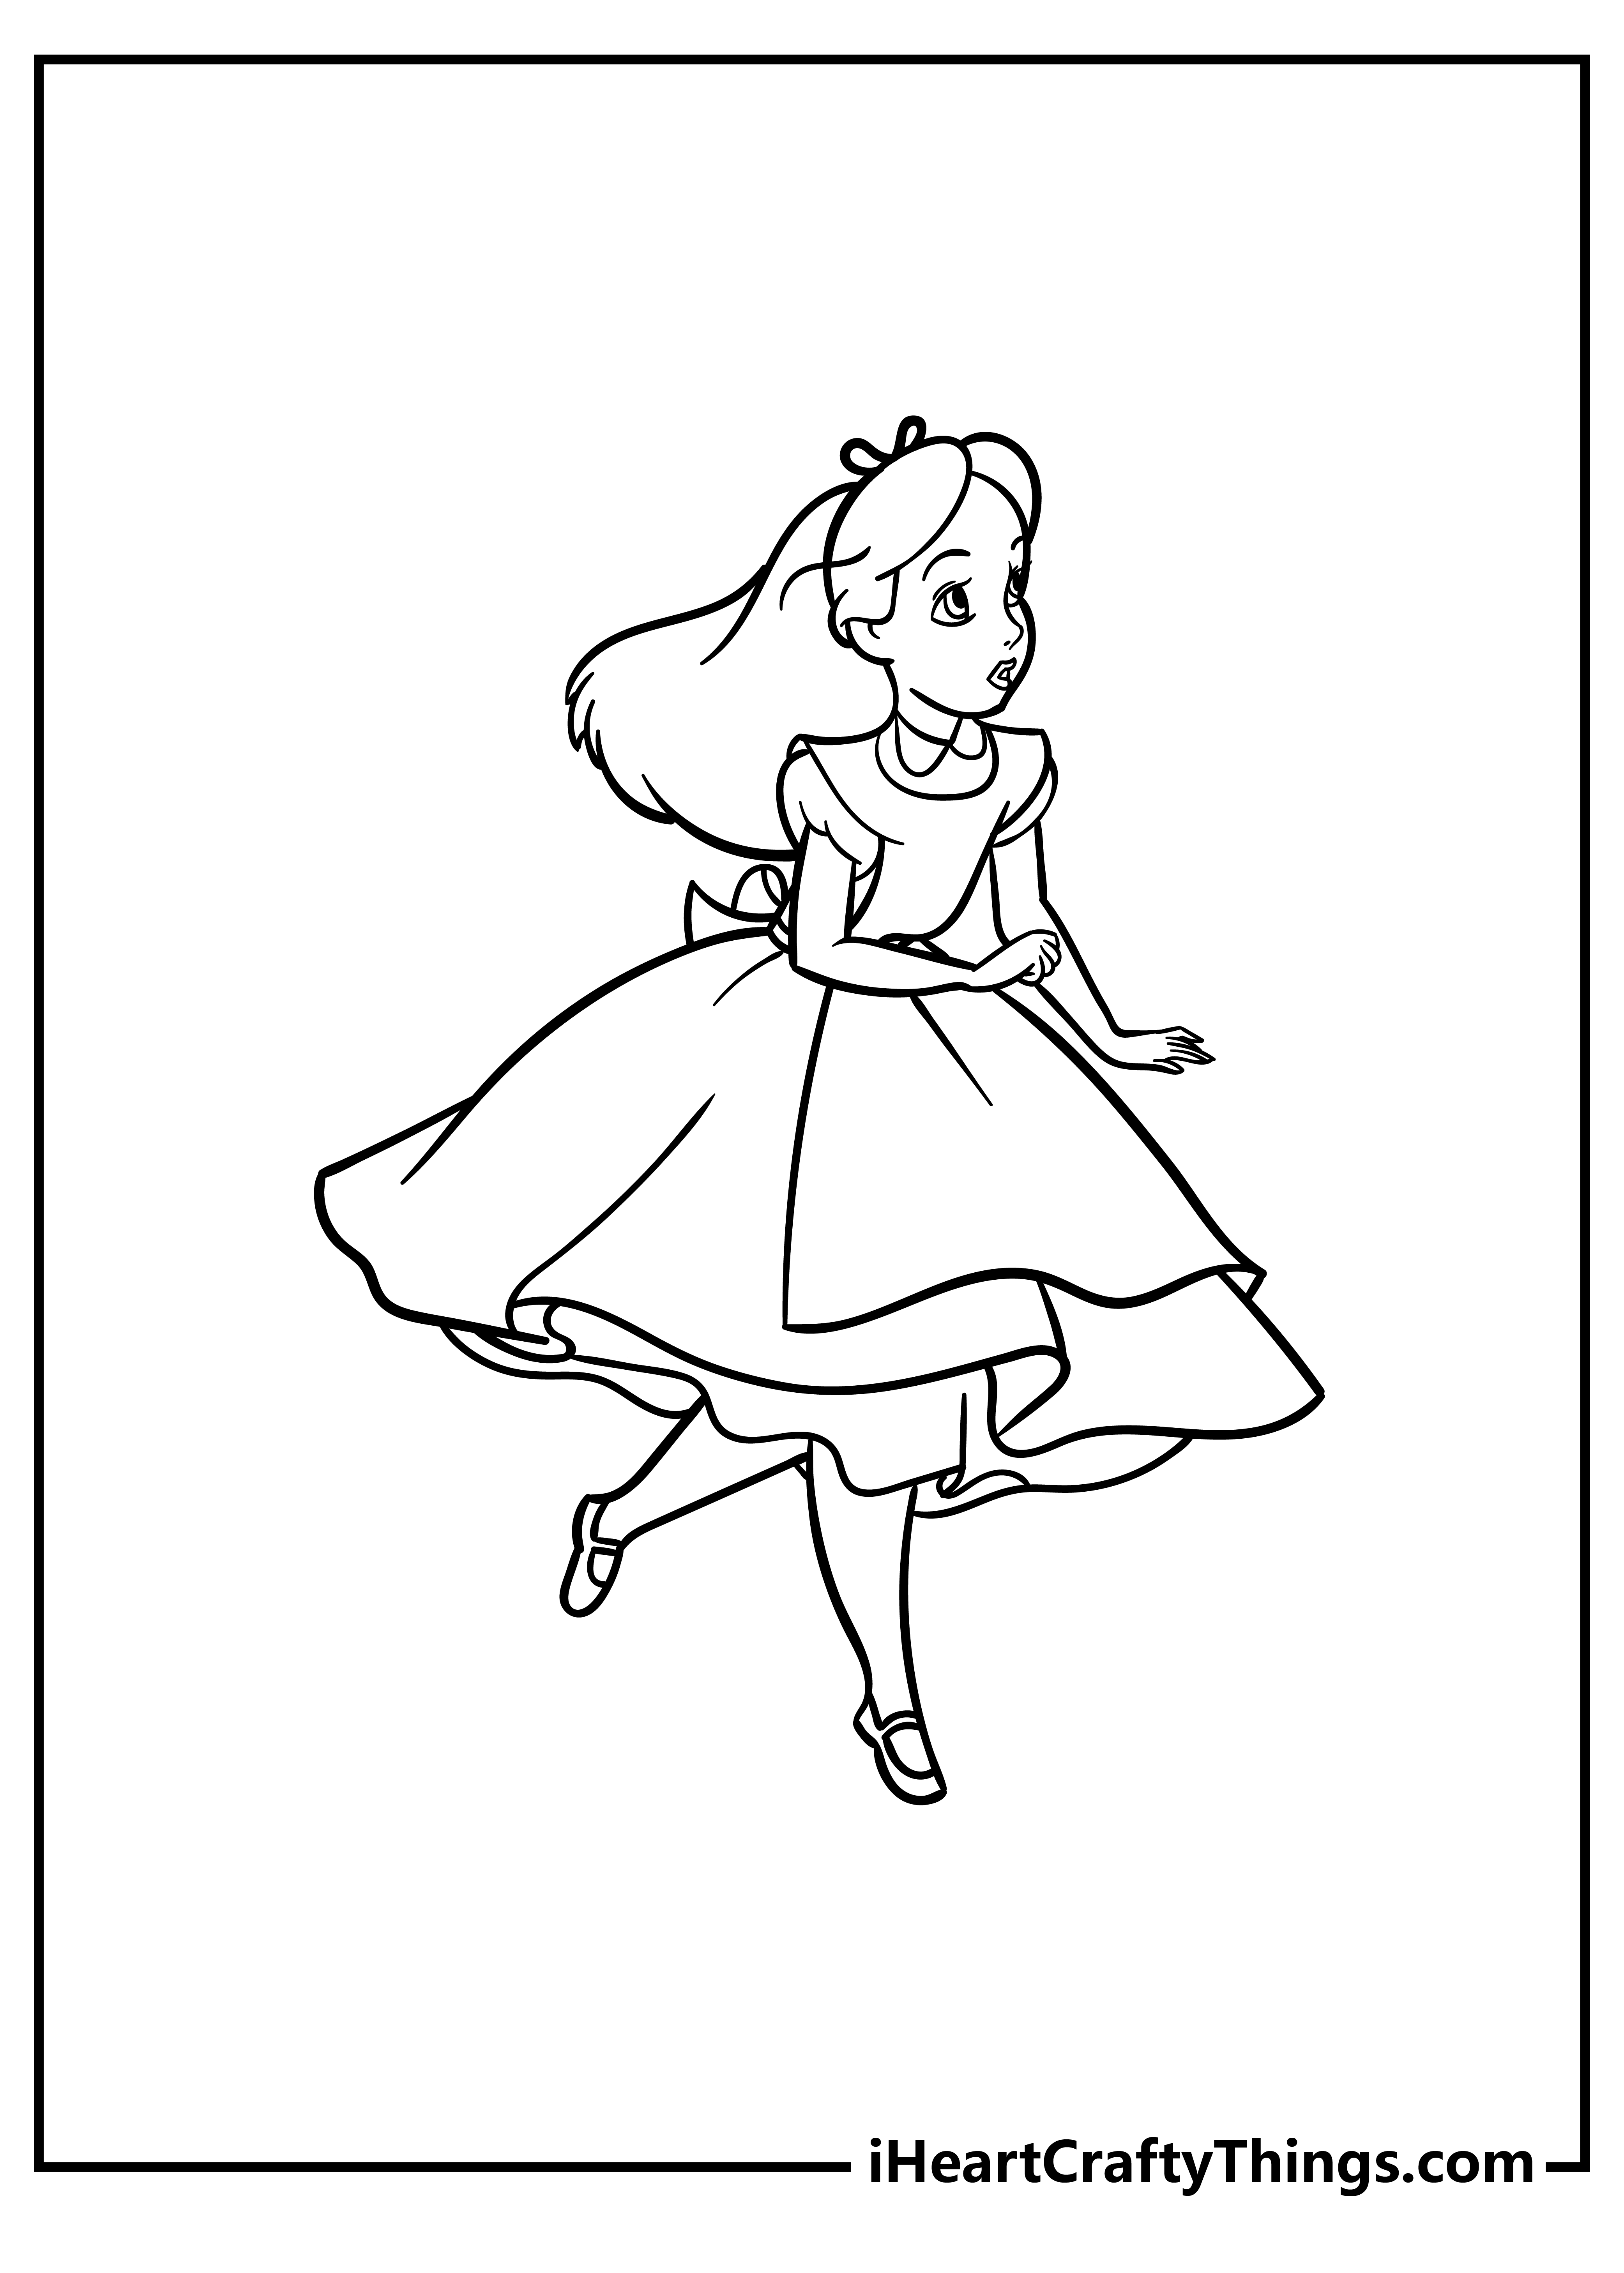 Alice In Wonderland Coloring Sheet for children free download